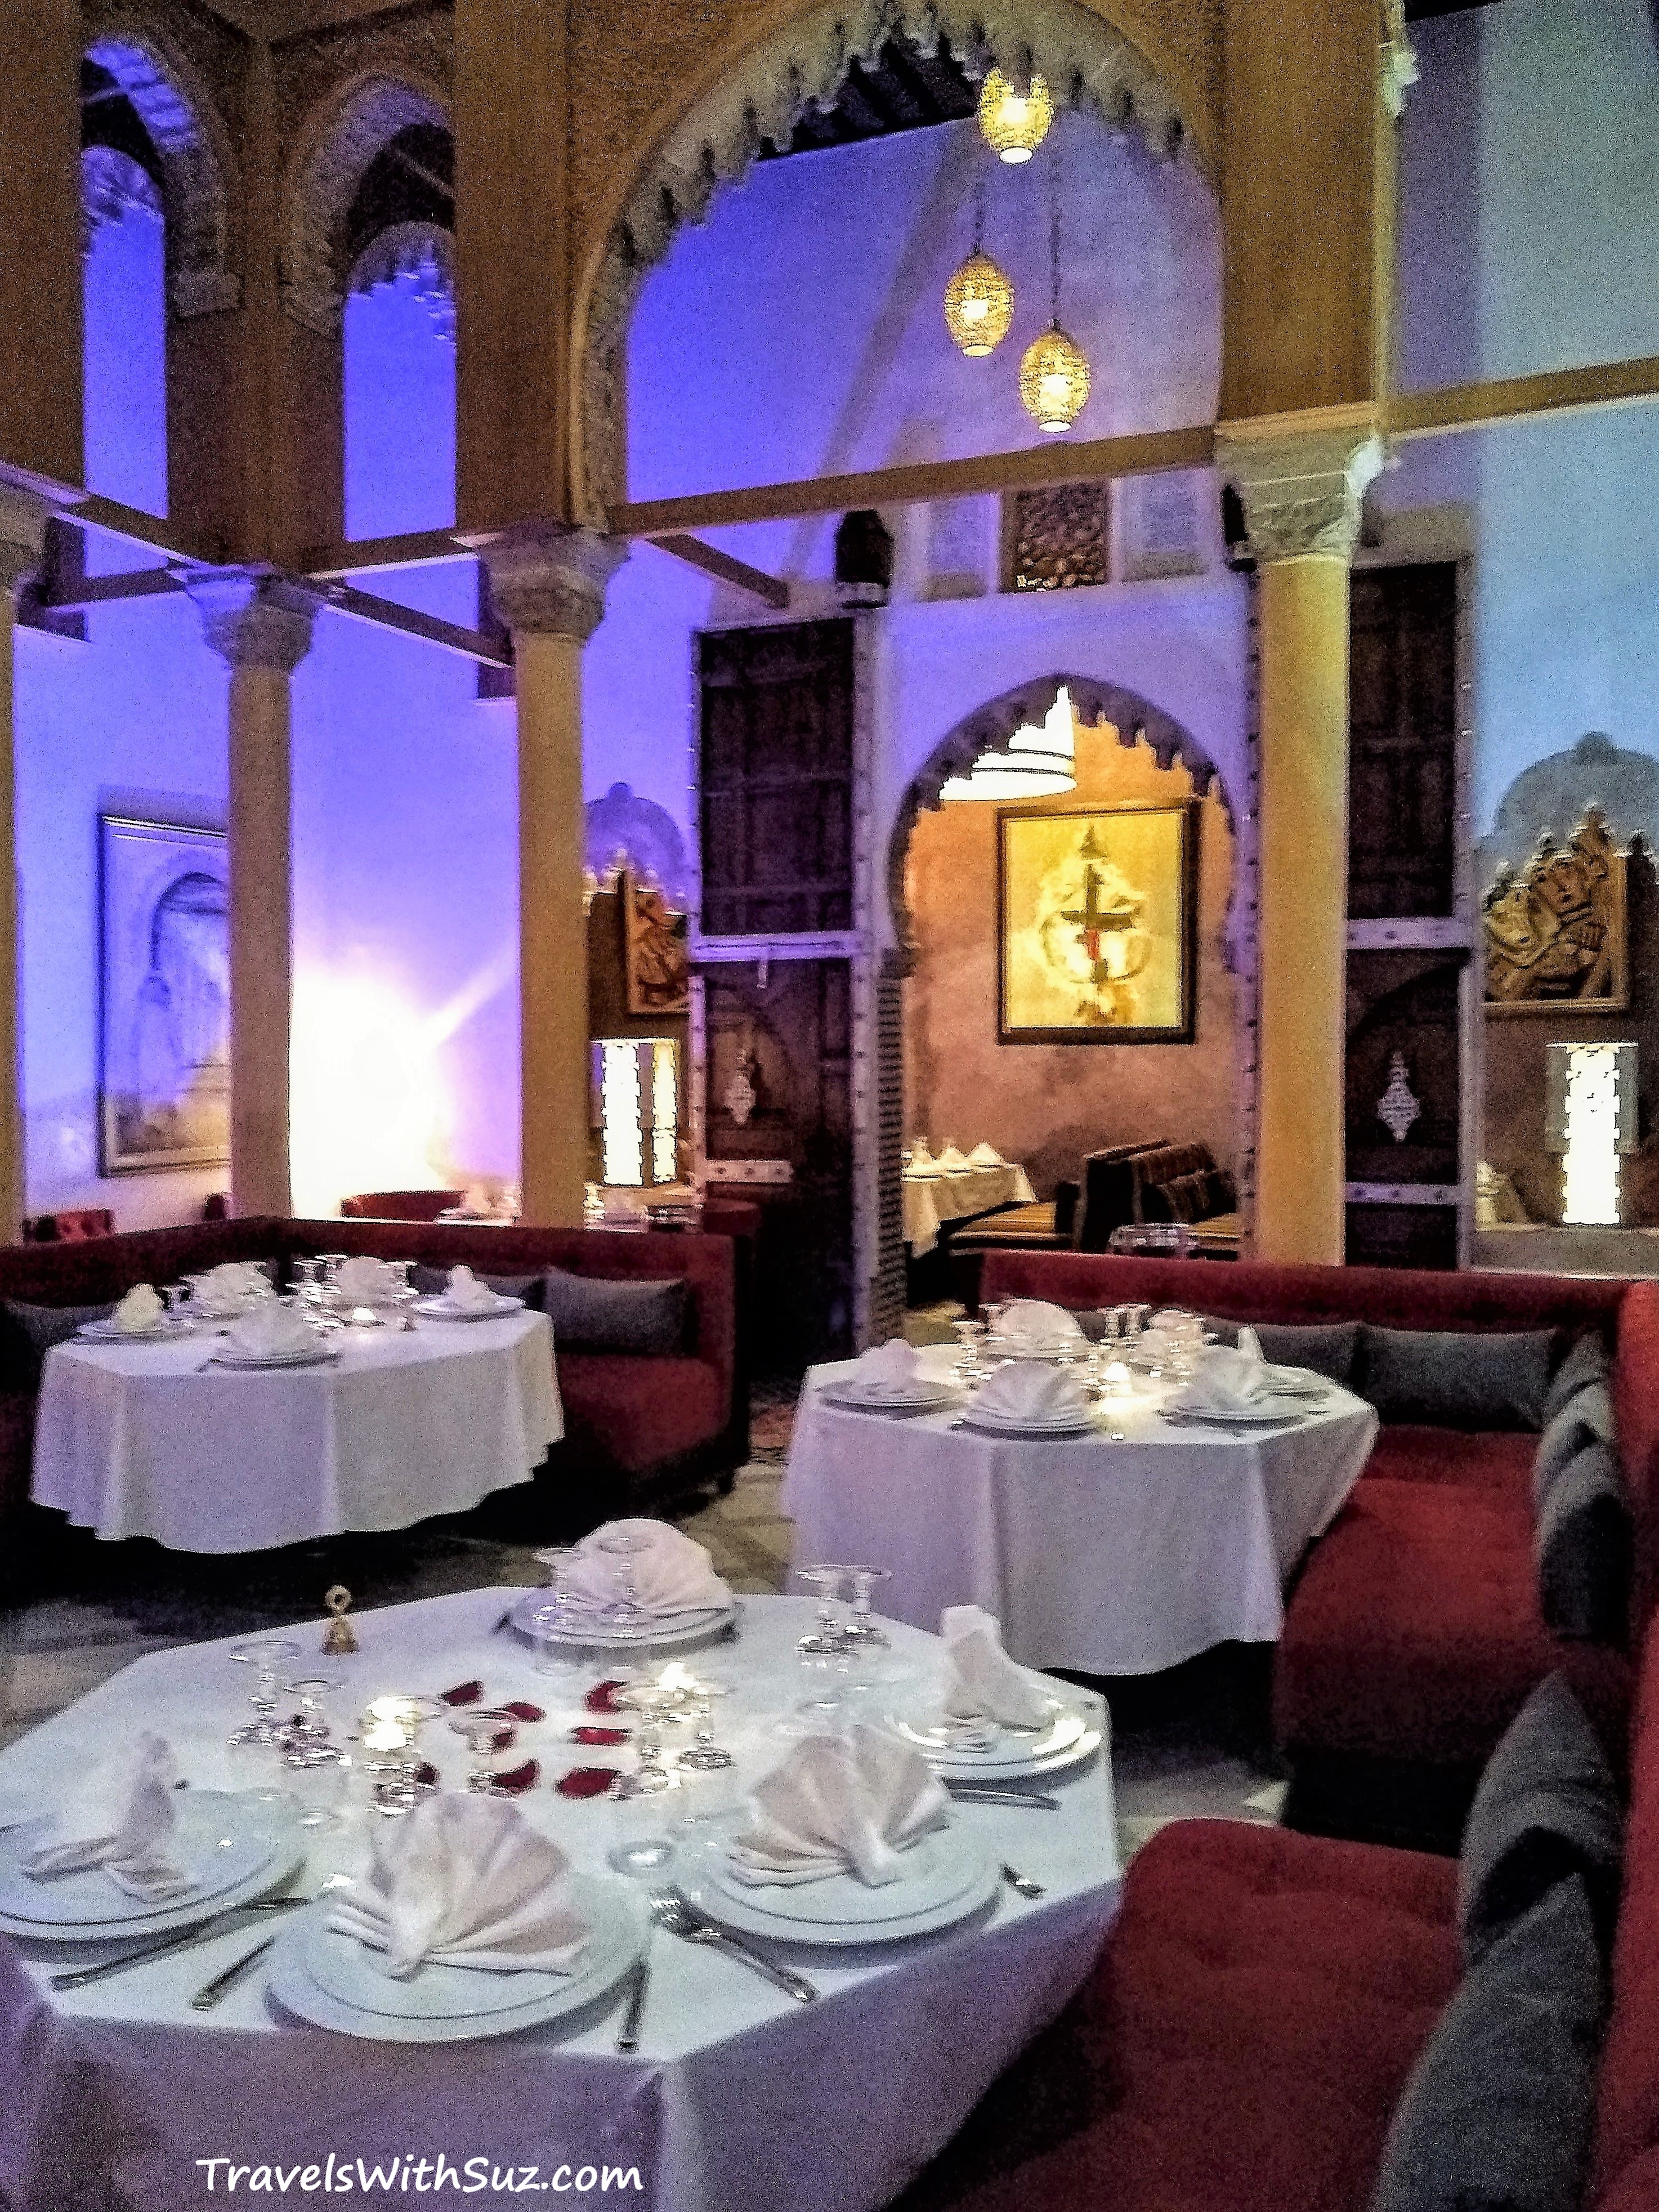 Dinarjat Restaurant, Rabat Morocco